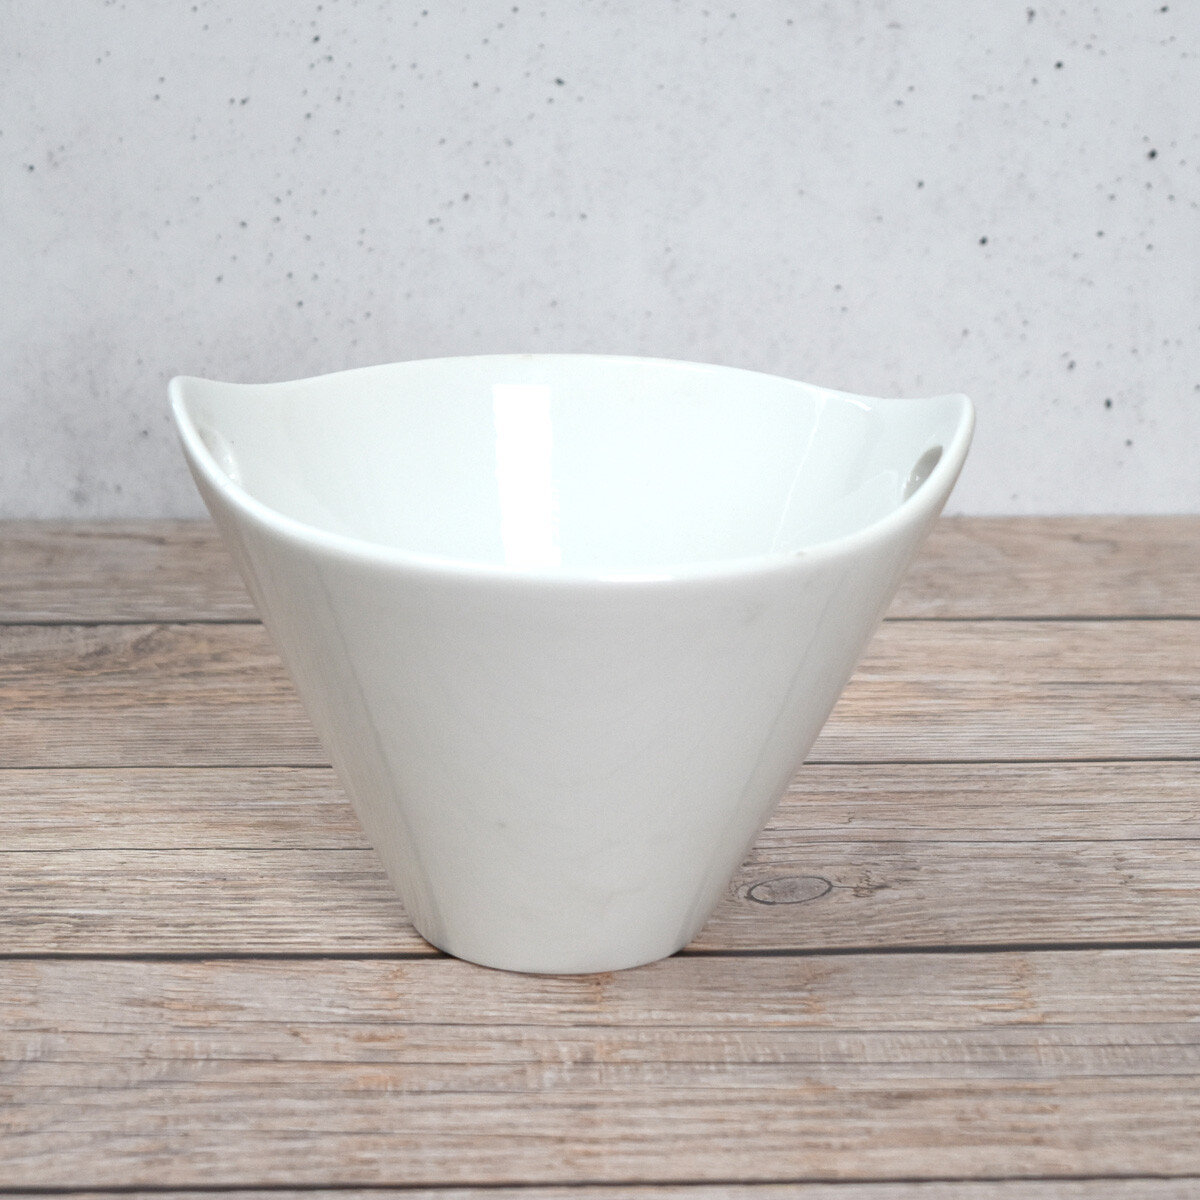 Bowl de cerámica blanco con asas 